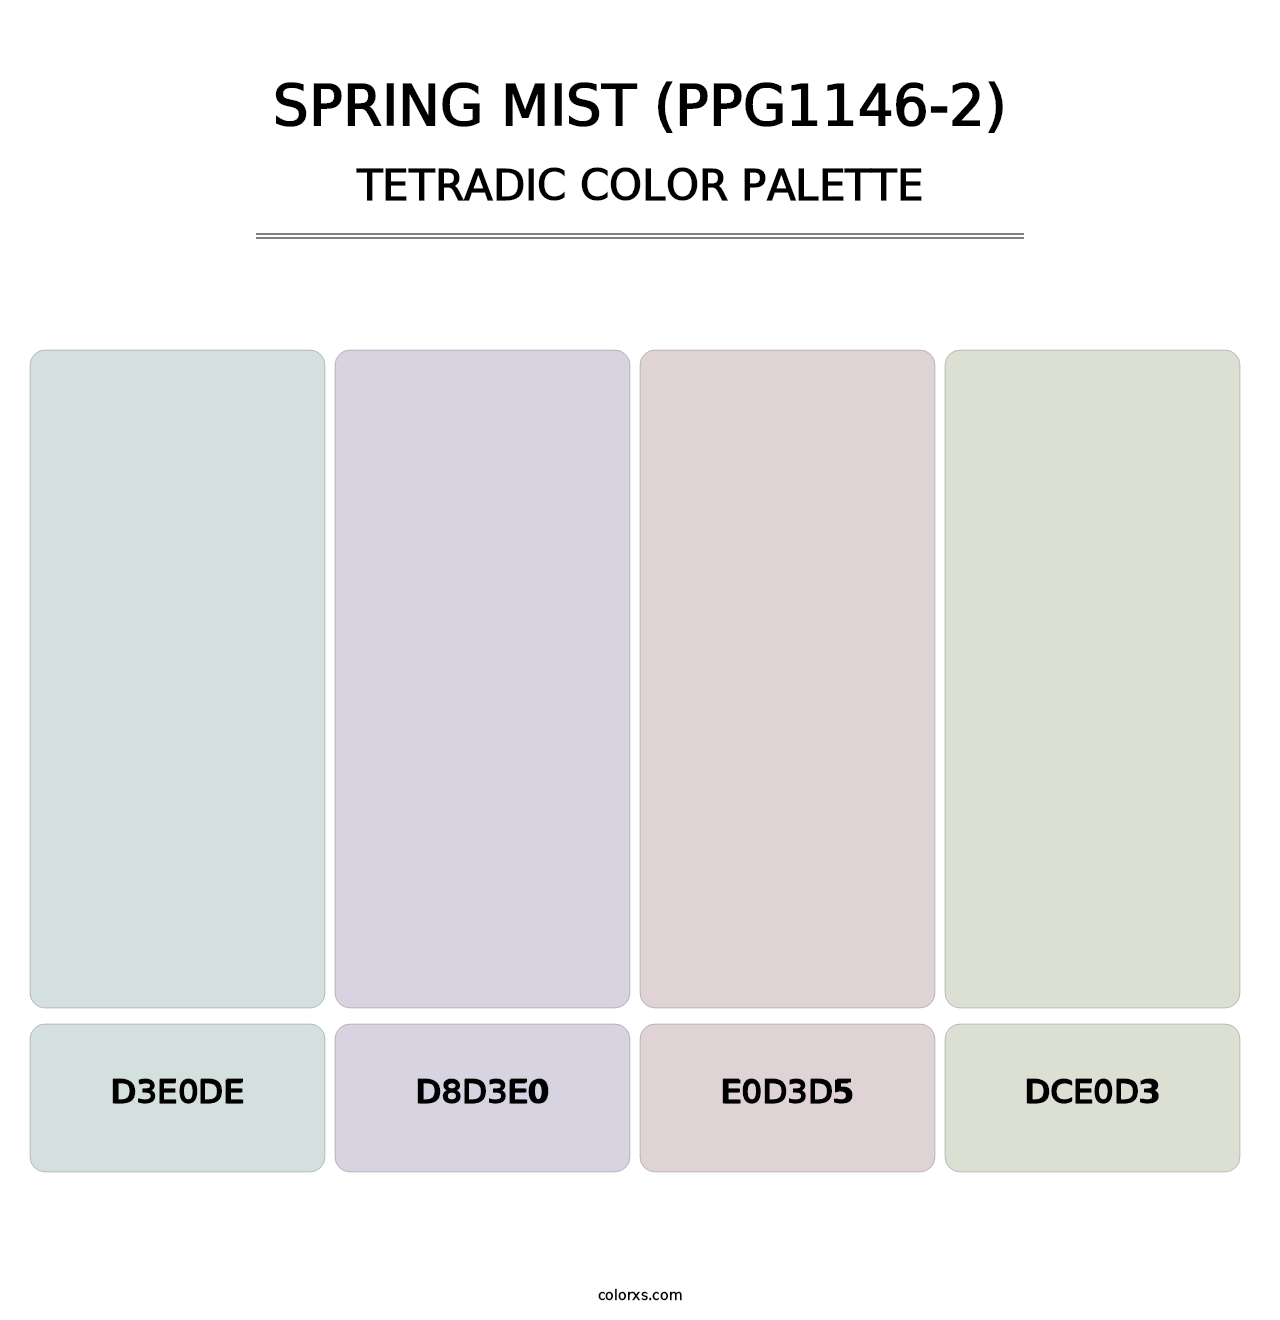 Spring Mist (PPG1146-2) - Tetradic Color Palette